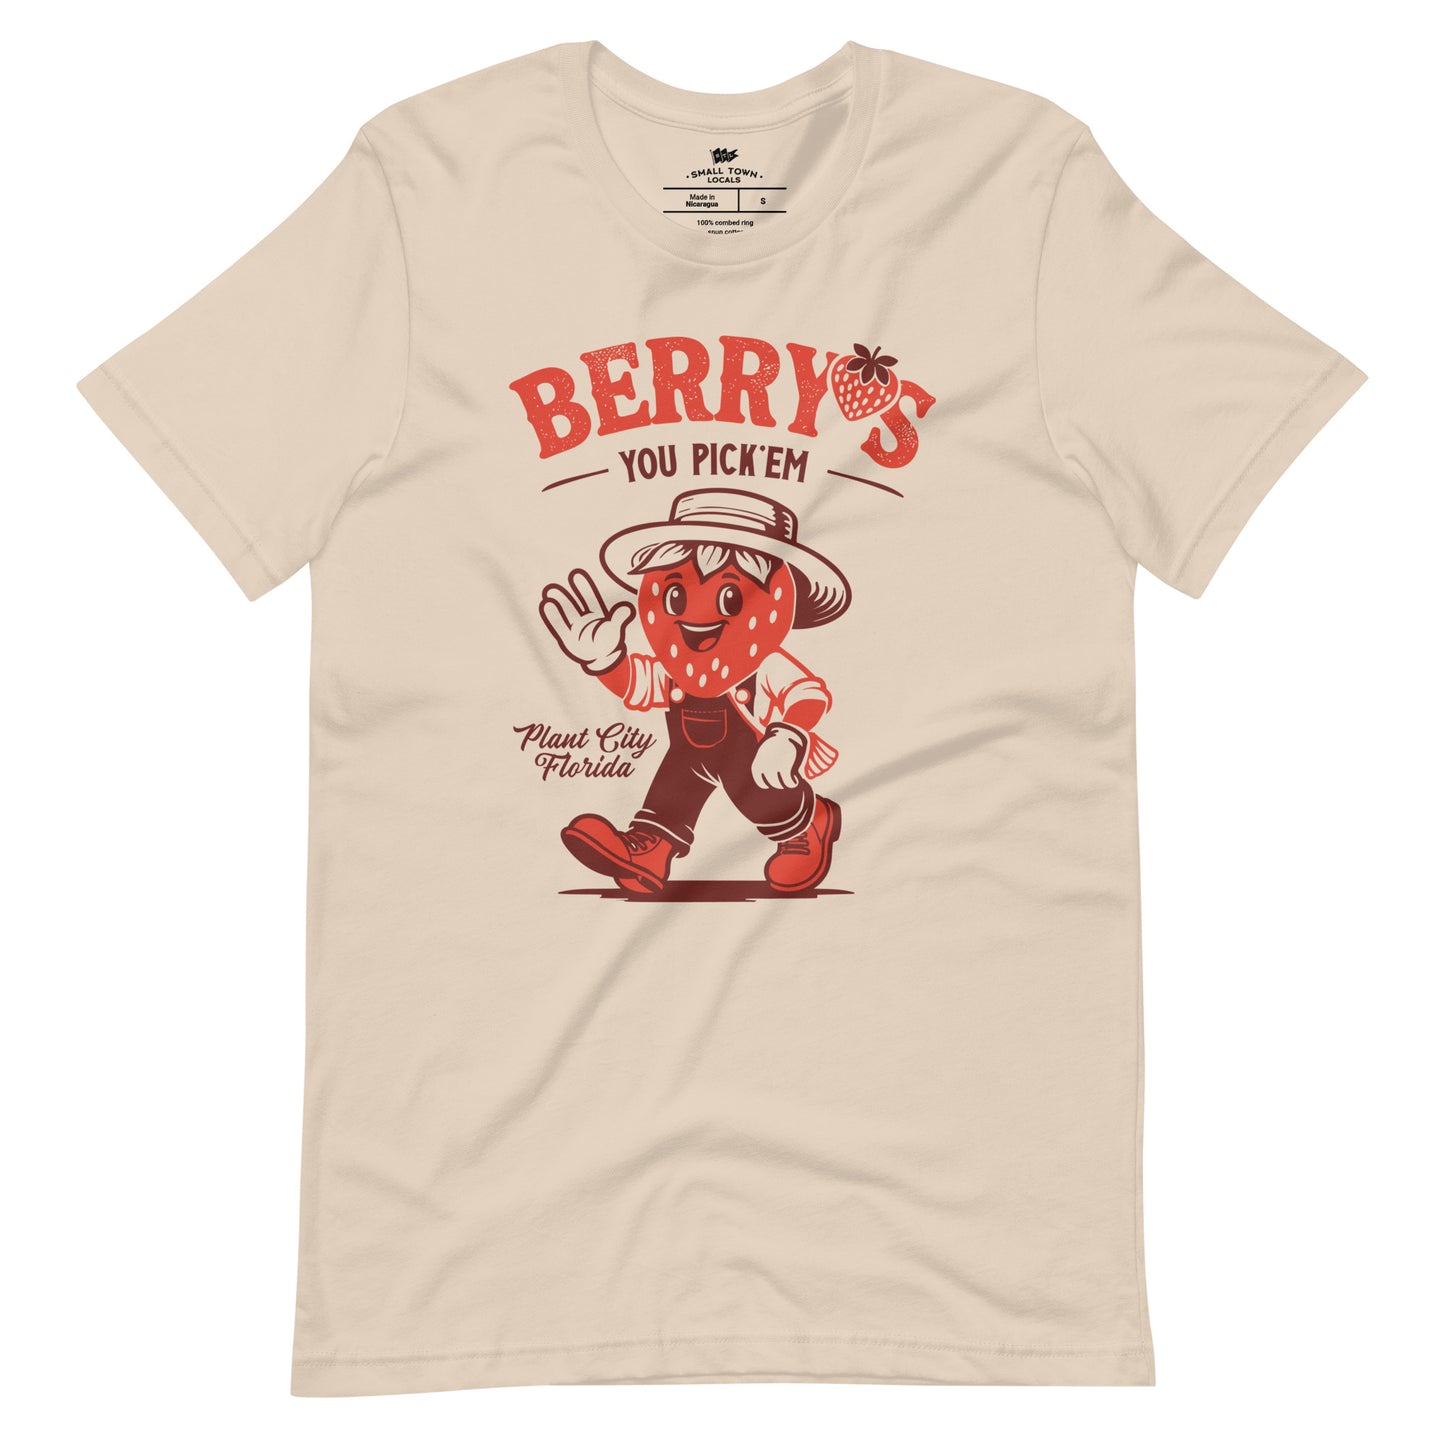 Mr. Berry - t-shirt